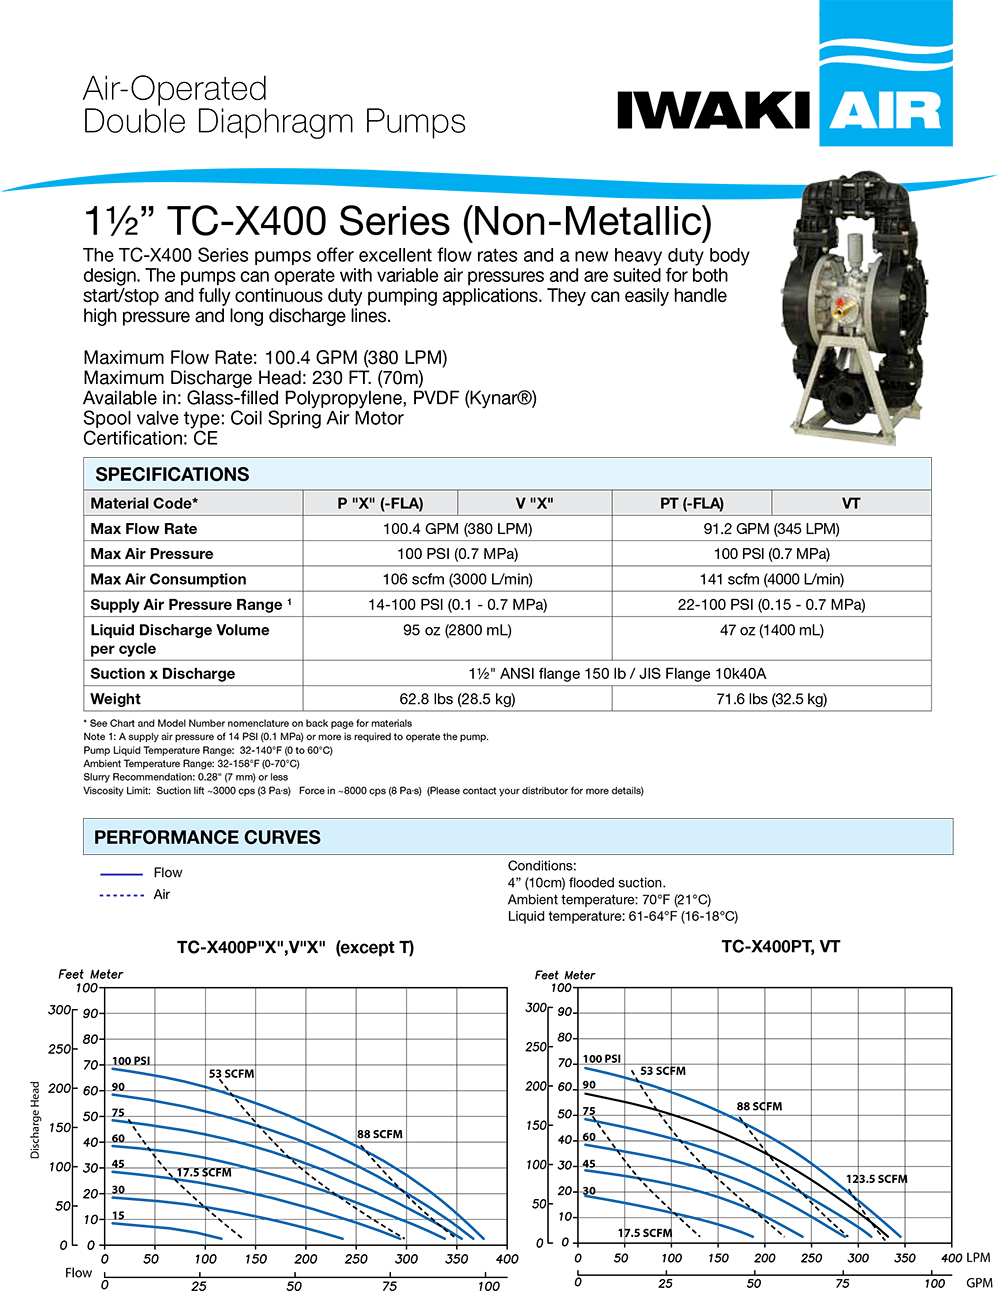 1 1/2″ TC-X400 Series AODD Pumps Data Sheet